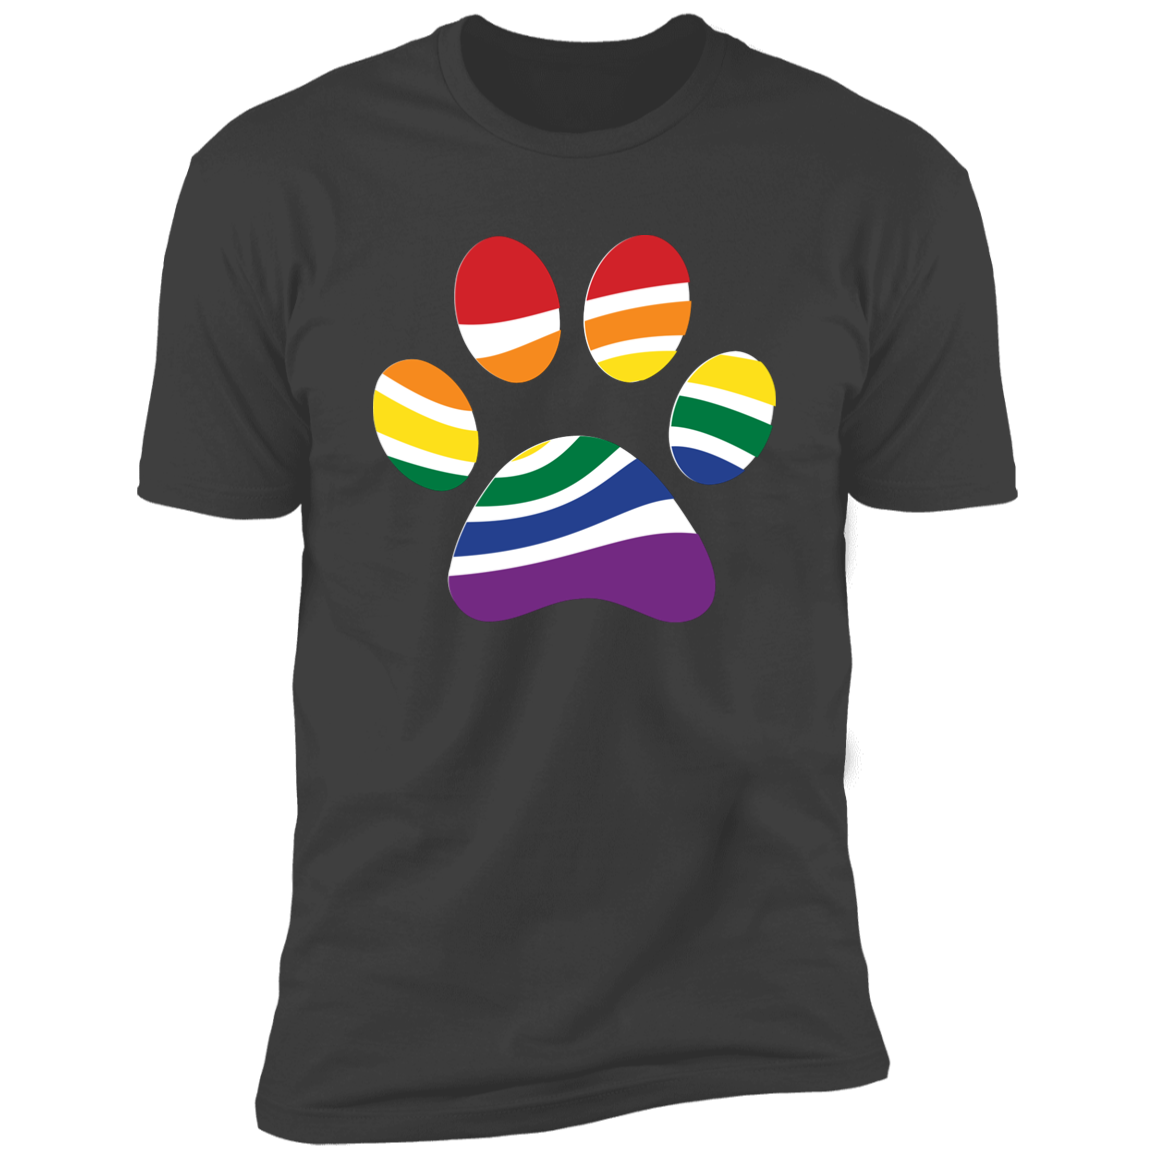 Pride Paw (Retro) Pride T-shirt, Paw Pride Dog Shirt for humans, in heavy metal gray